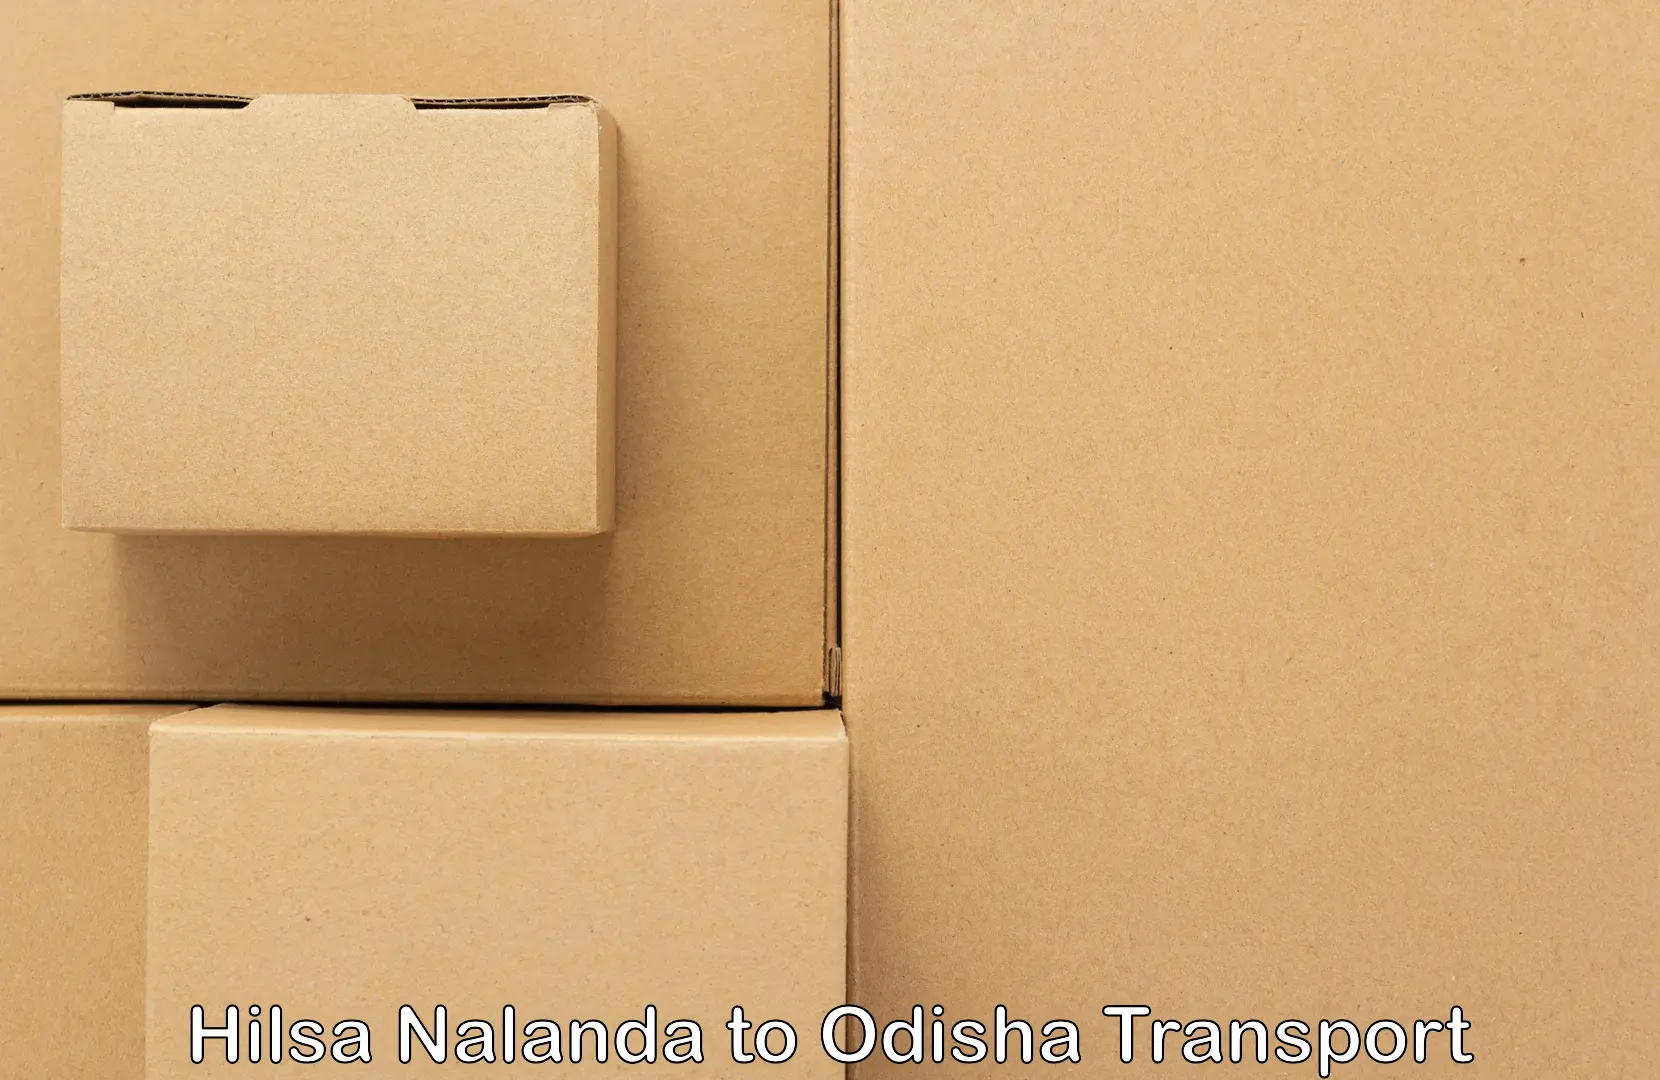 Delivery service Hilsa Nalanda to Balinga